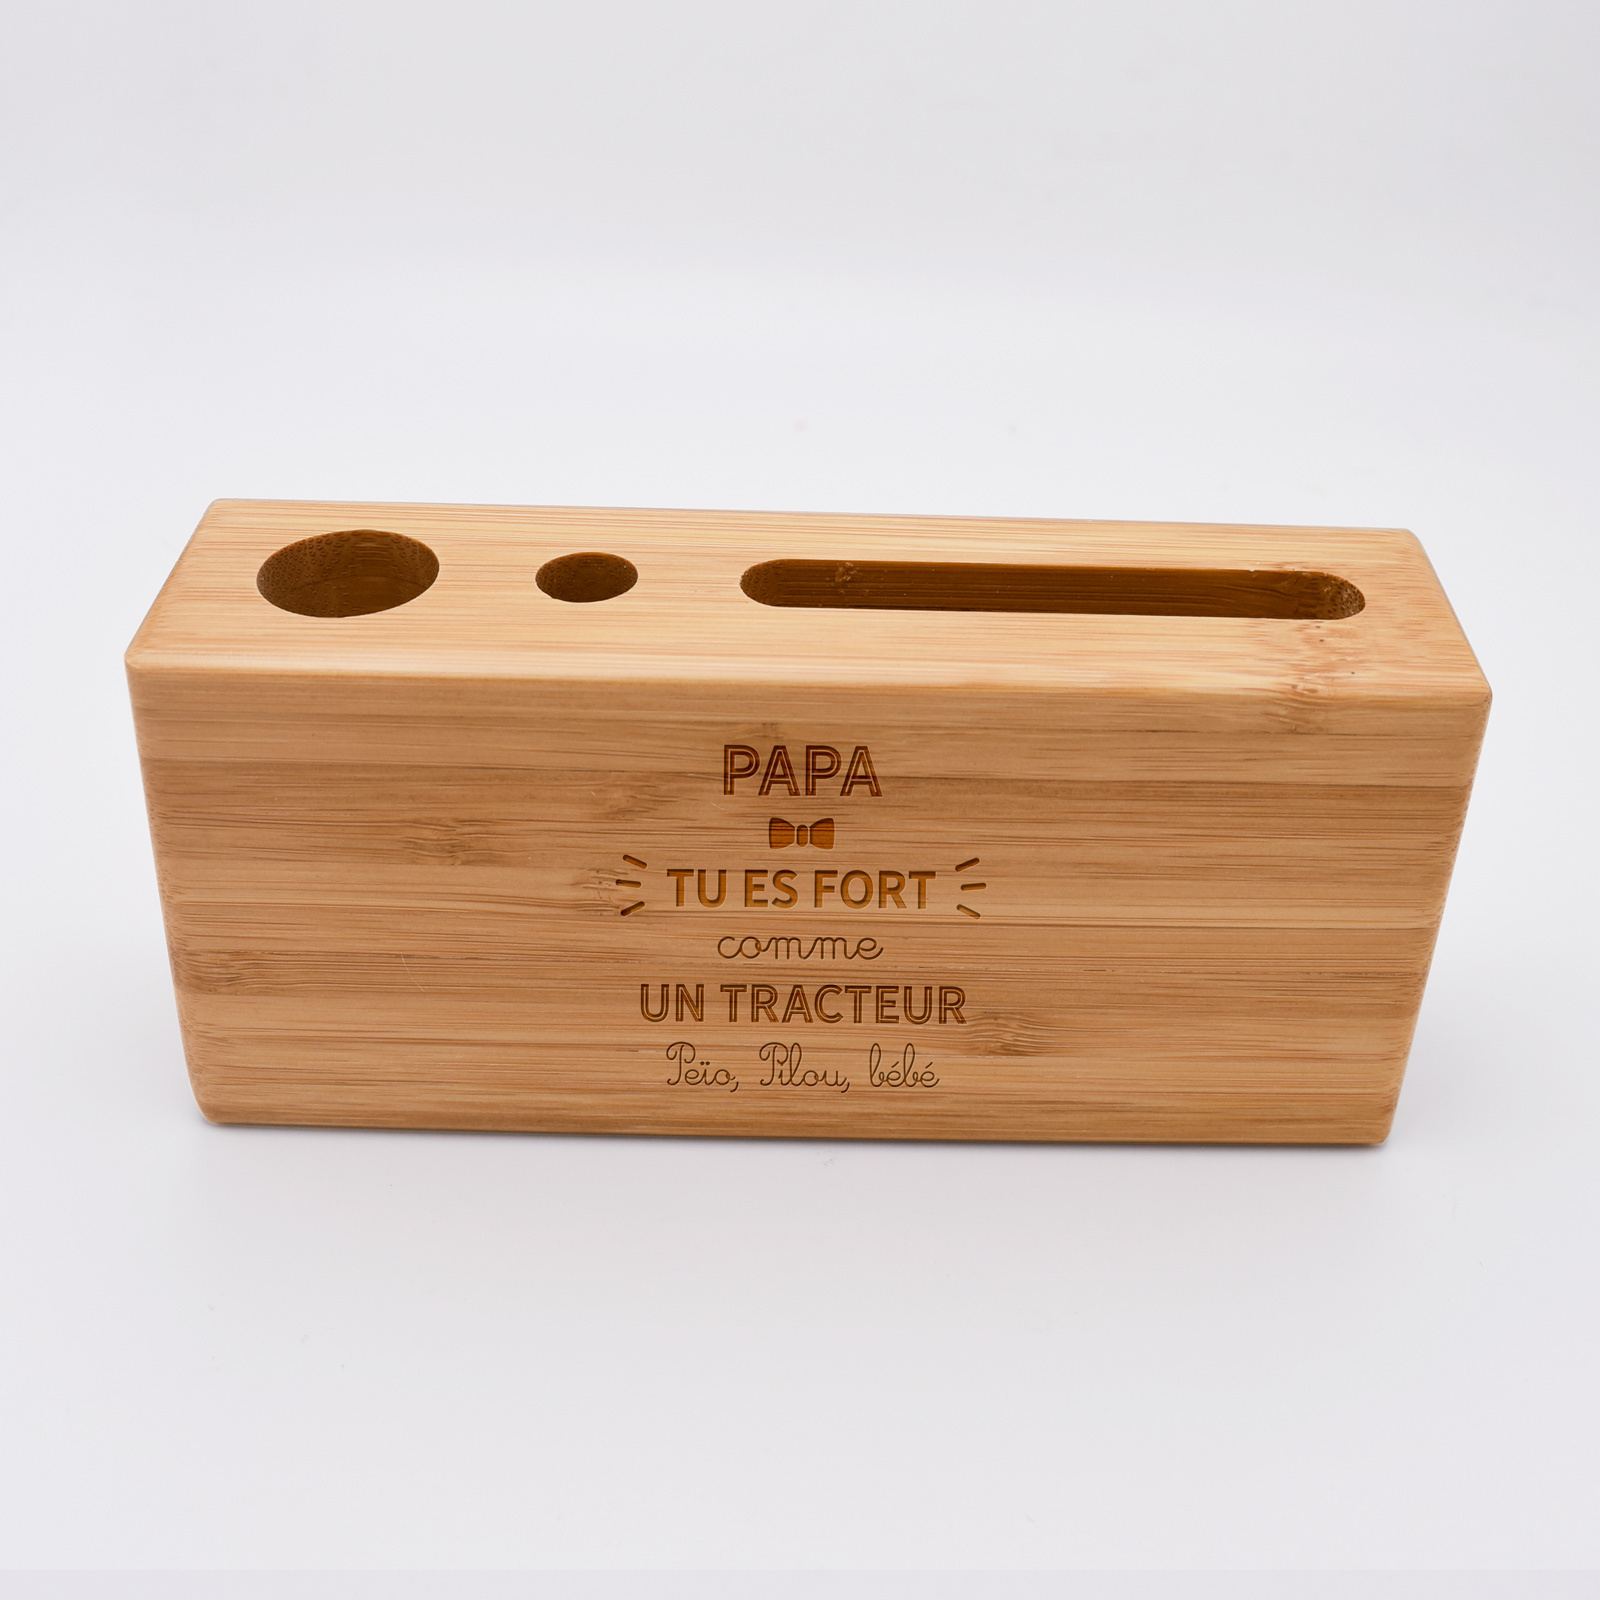 Personalised desk organiser 14,6x6,5 cm wood engraved - special edition Papa tu es fort"